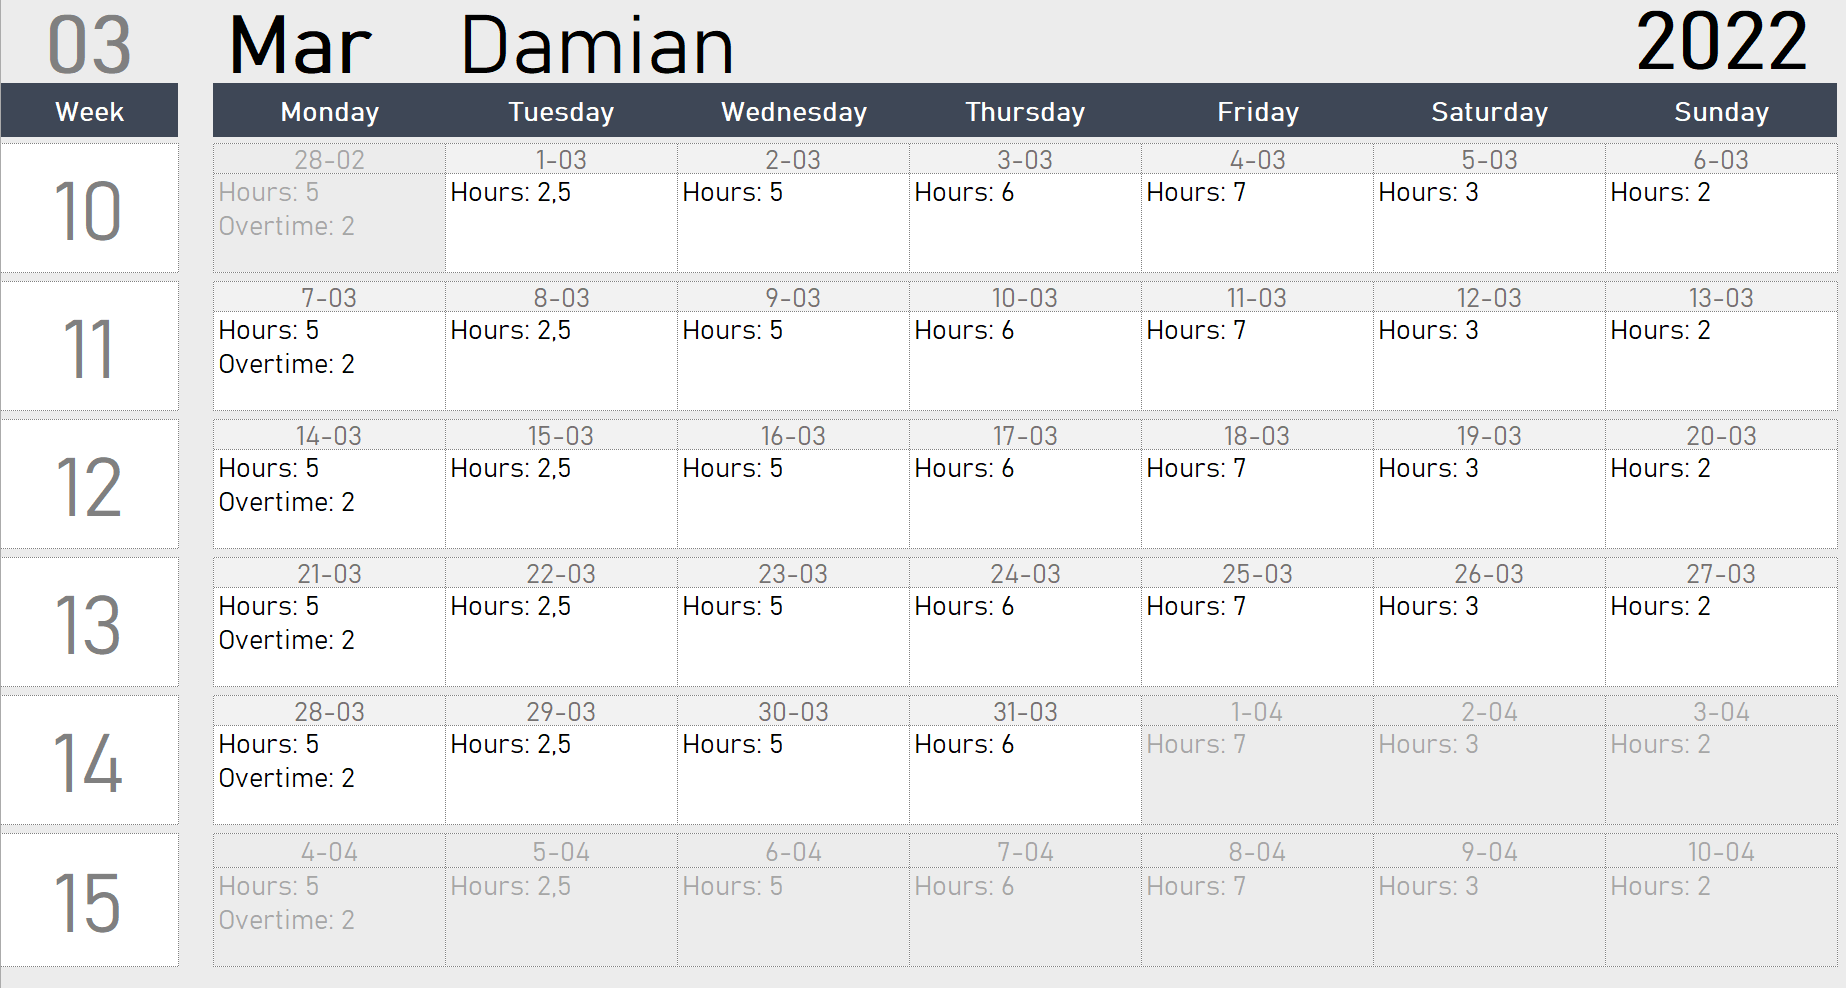 15 Free Weekly Calendar Templates